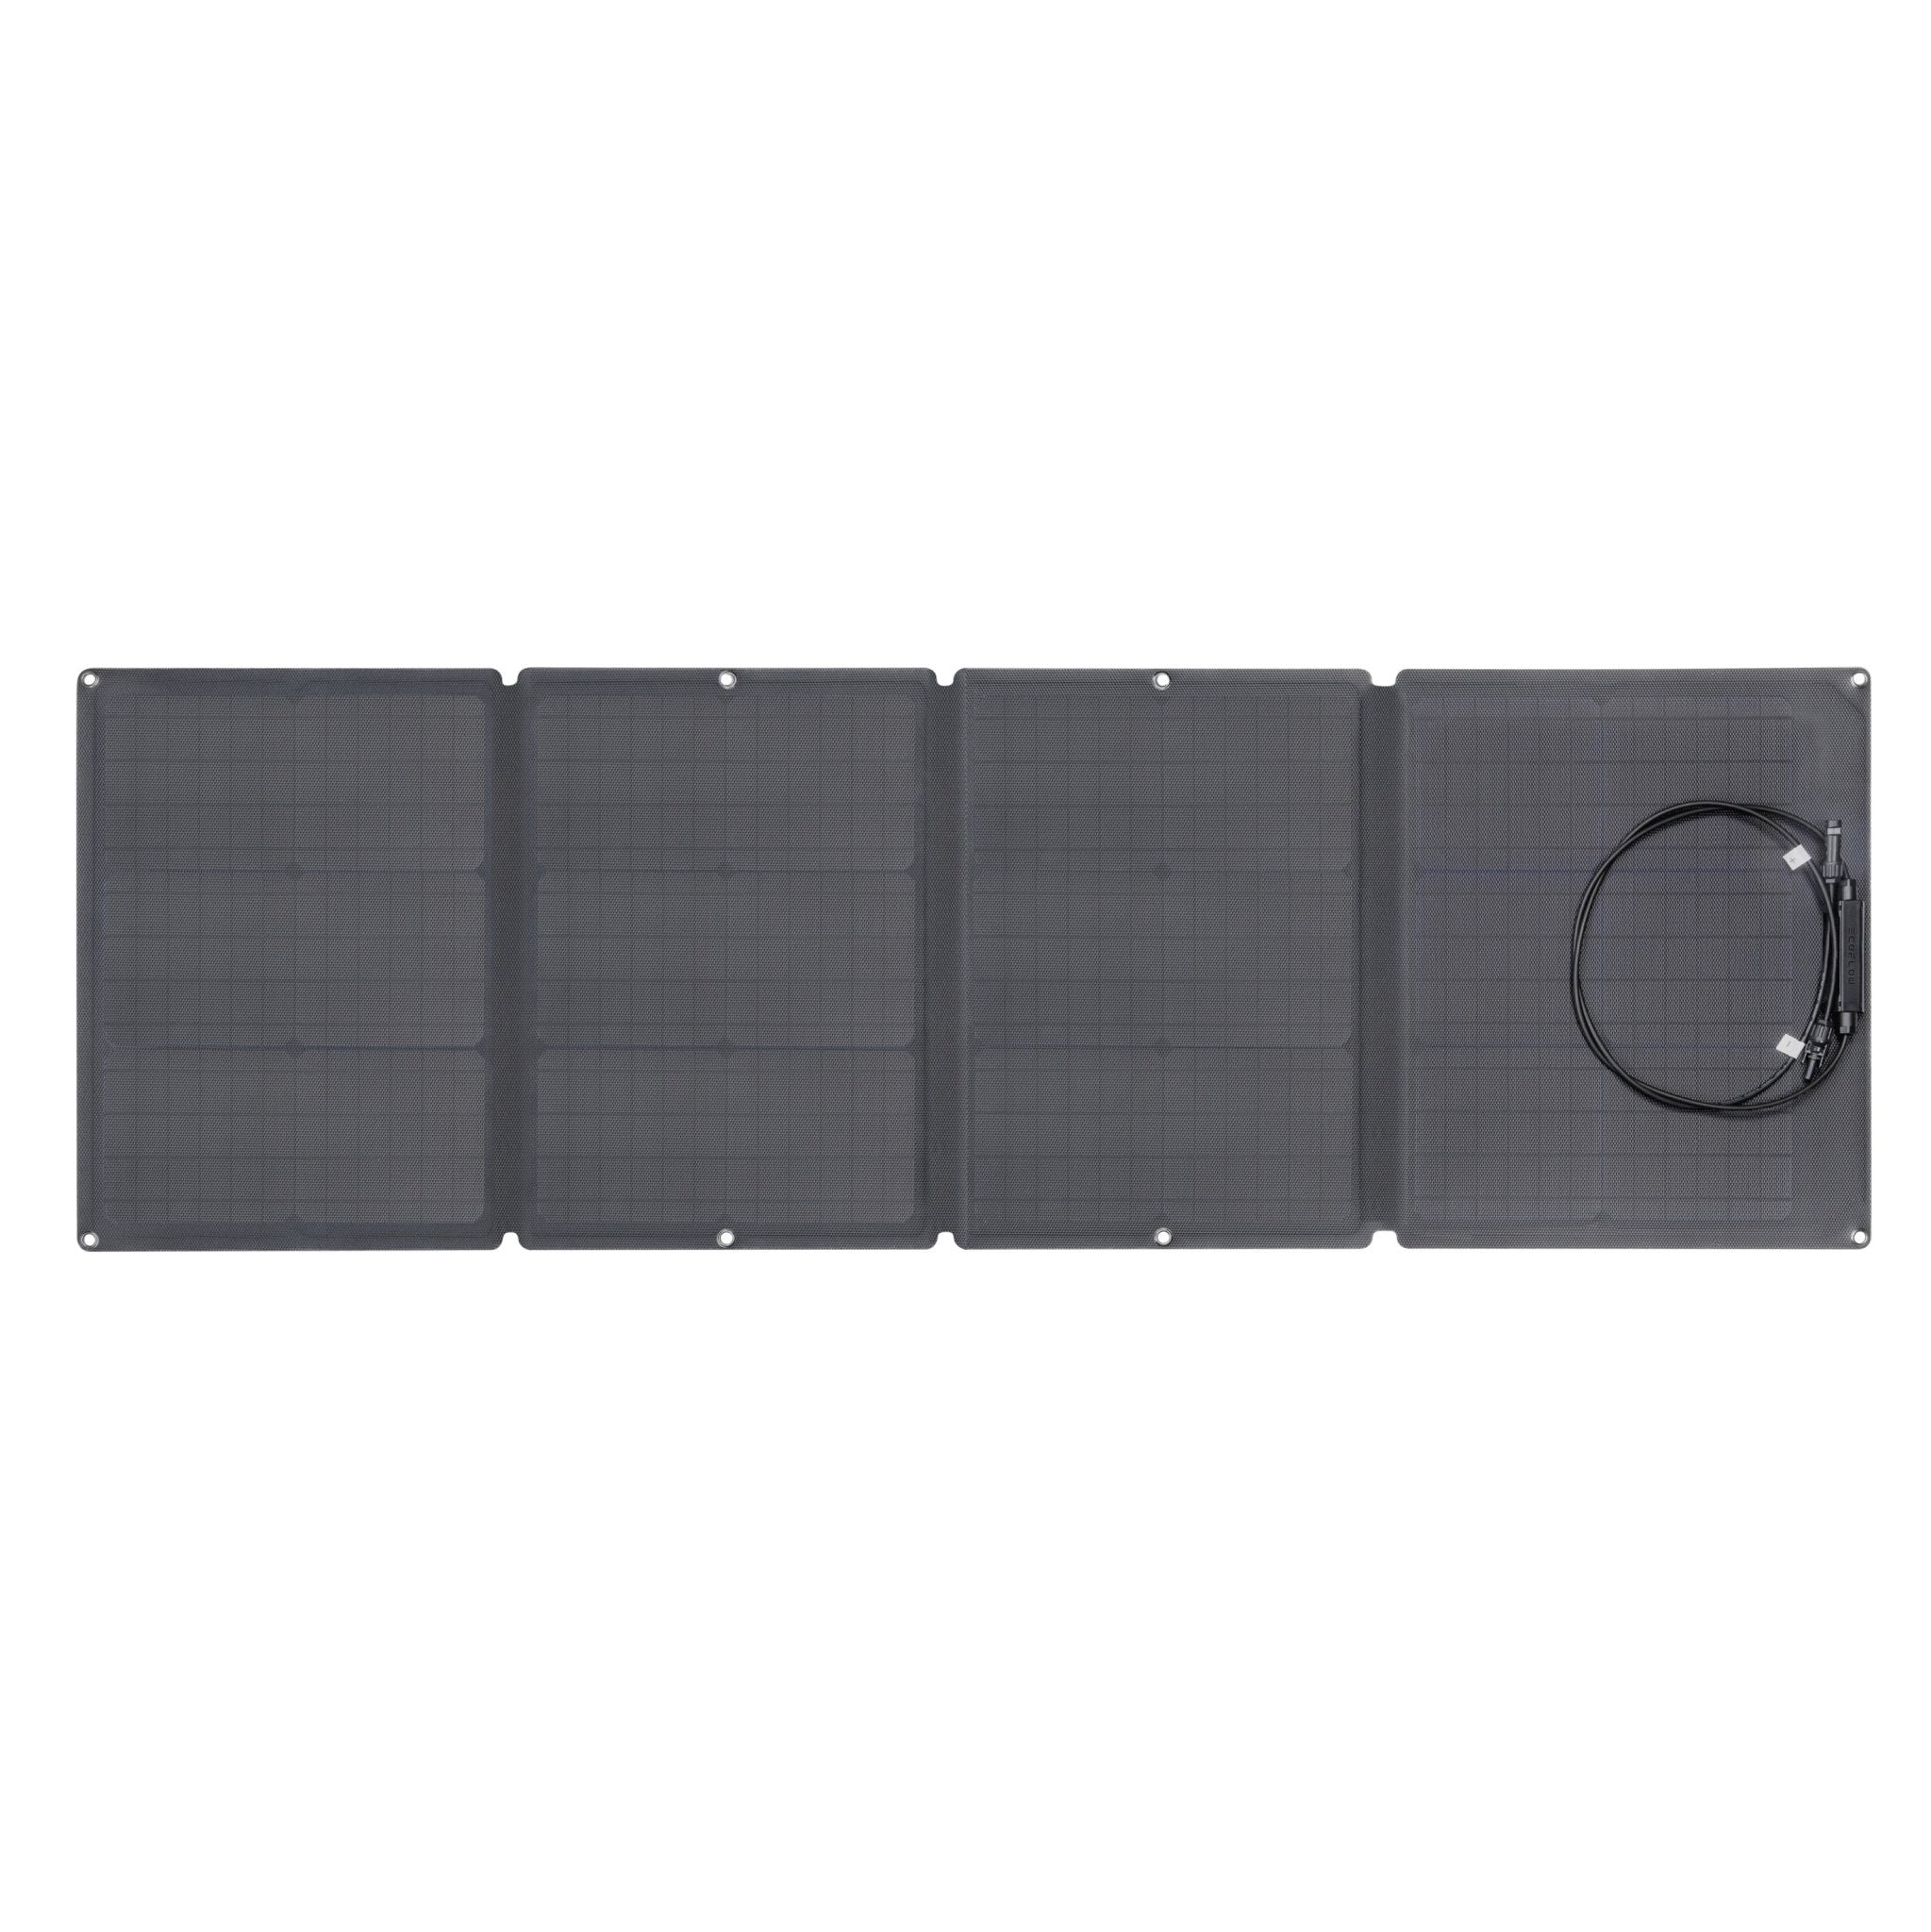 EcoFlow DELTA 2 Solar Generator + 2x 160W Portable Solar Panel - Solar Generators and Power Stations Plus